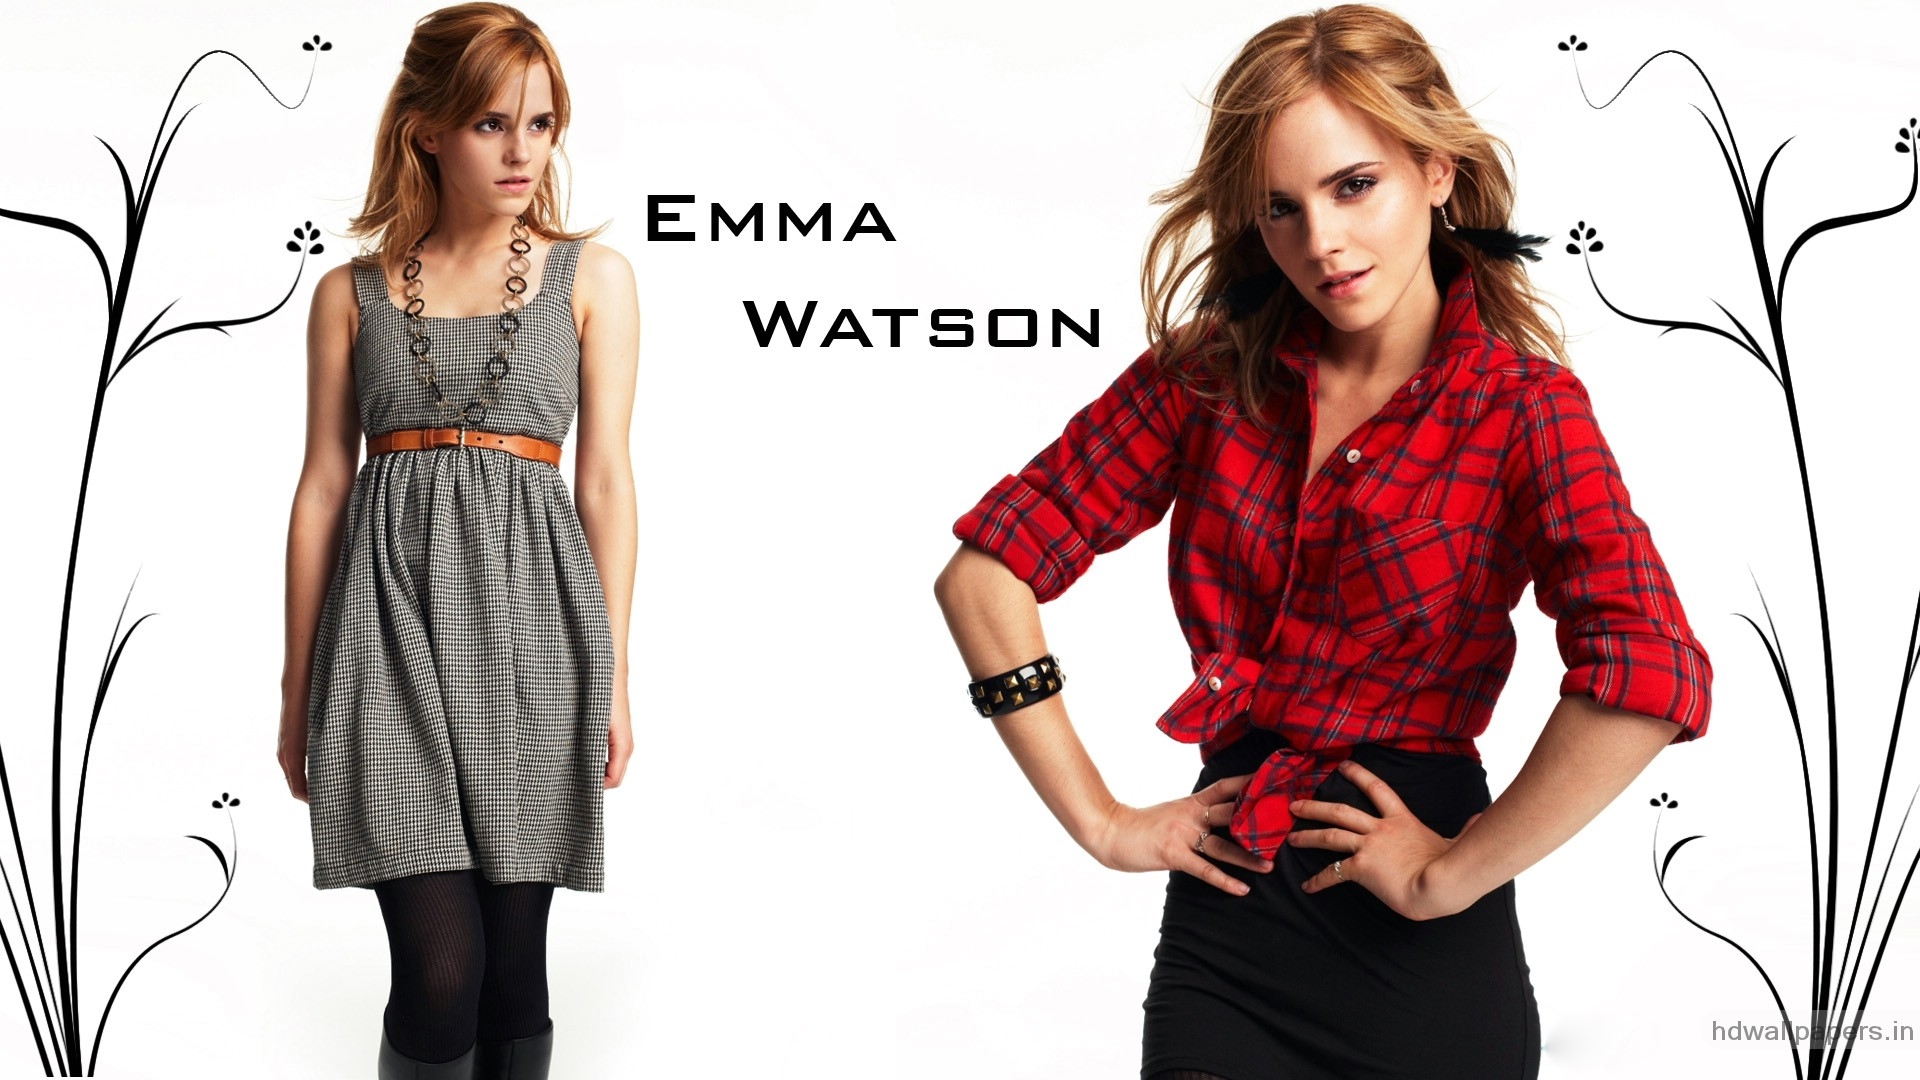 Stock Photos Of Emma Watson HD Image Photography